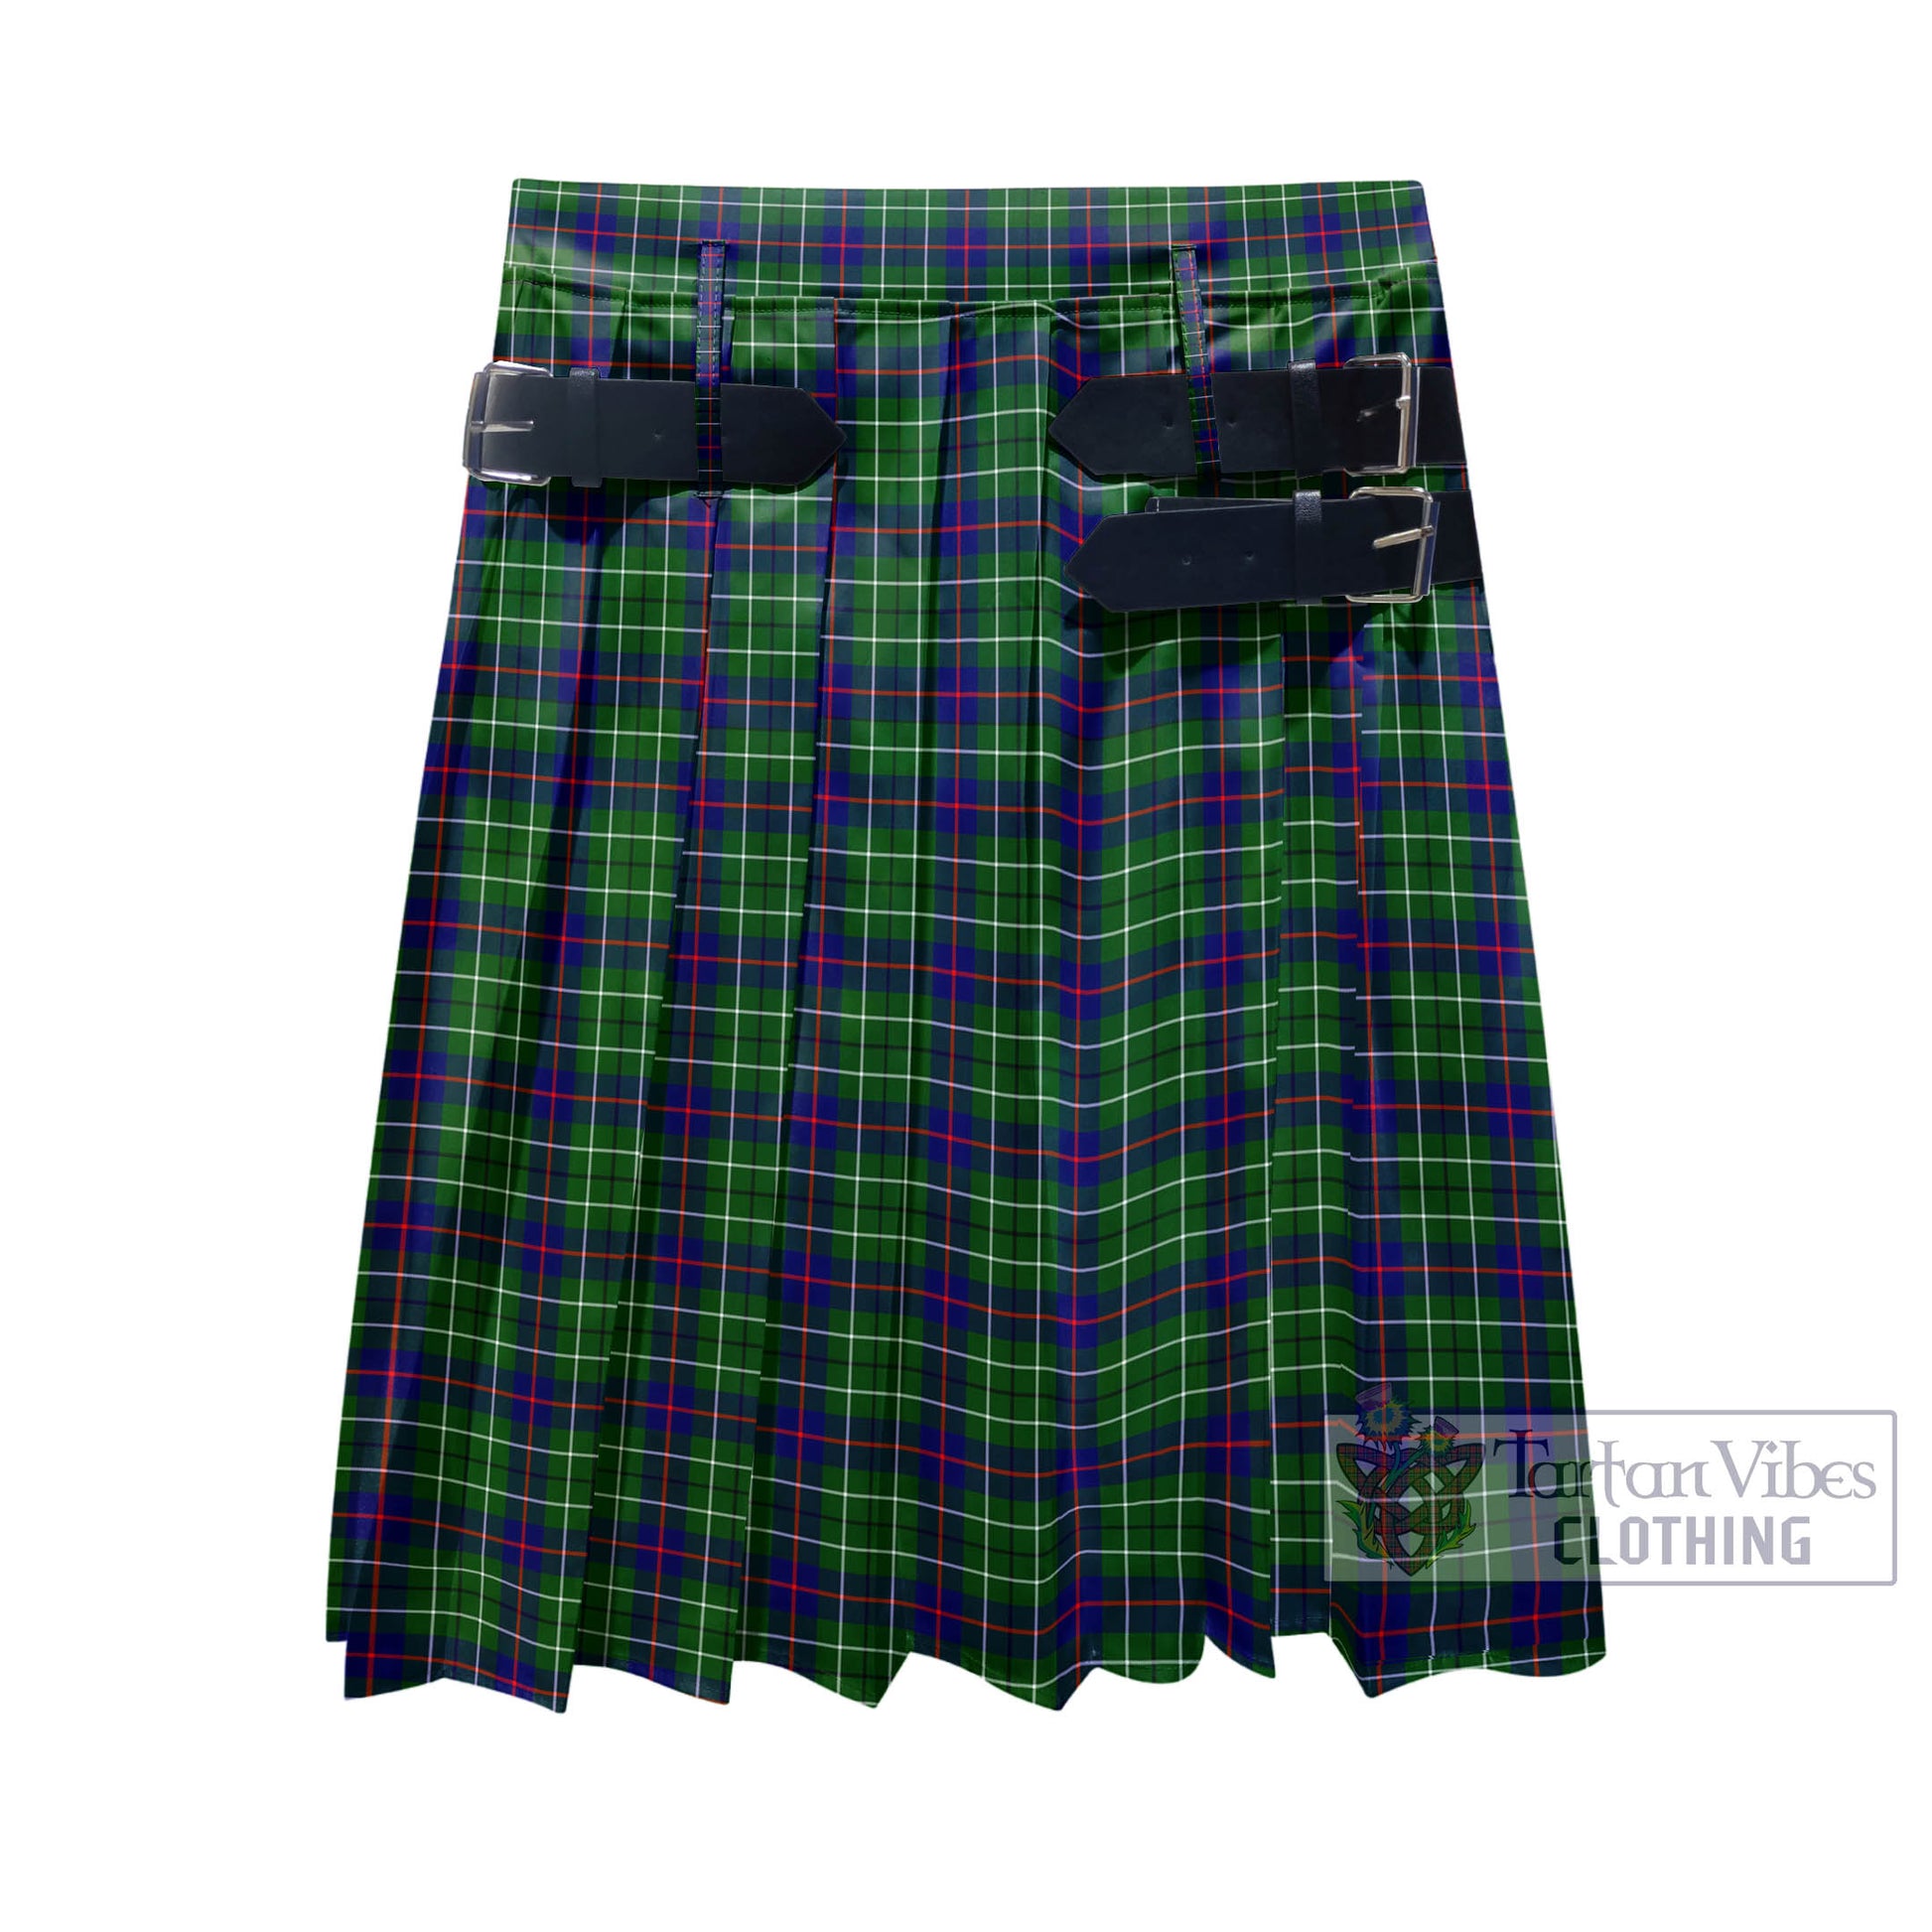 Tartan Vibes Clothing Duncan Modern Tartan Men's Pleated Skirt - Fashion Casual Retro Scottish Style